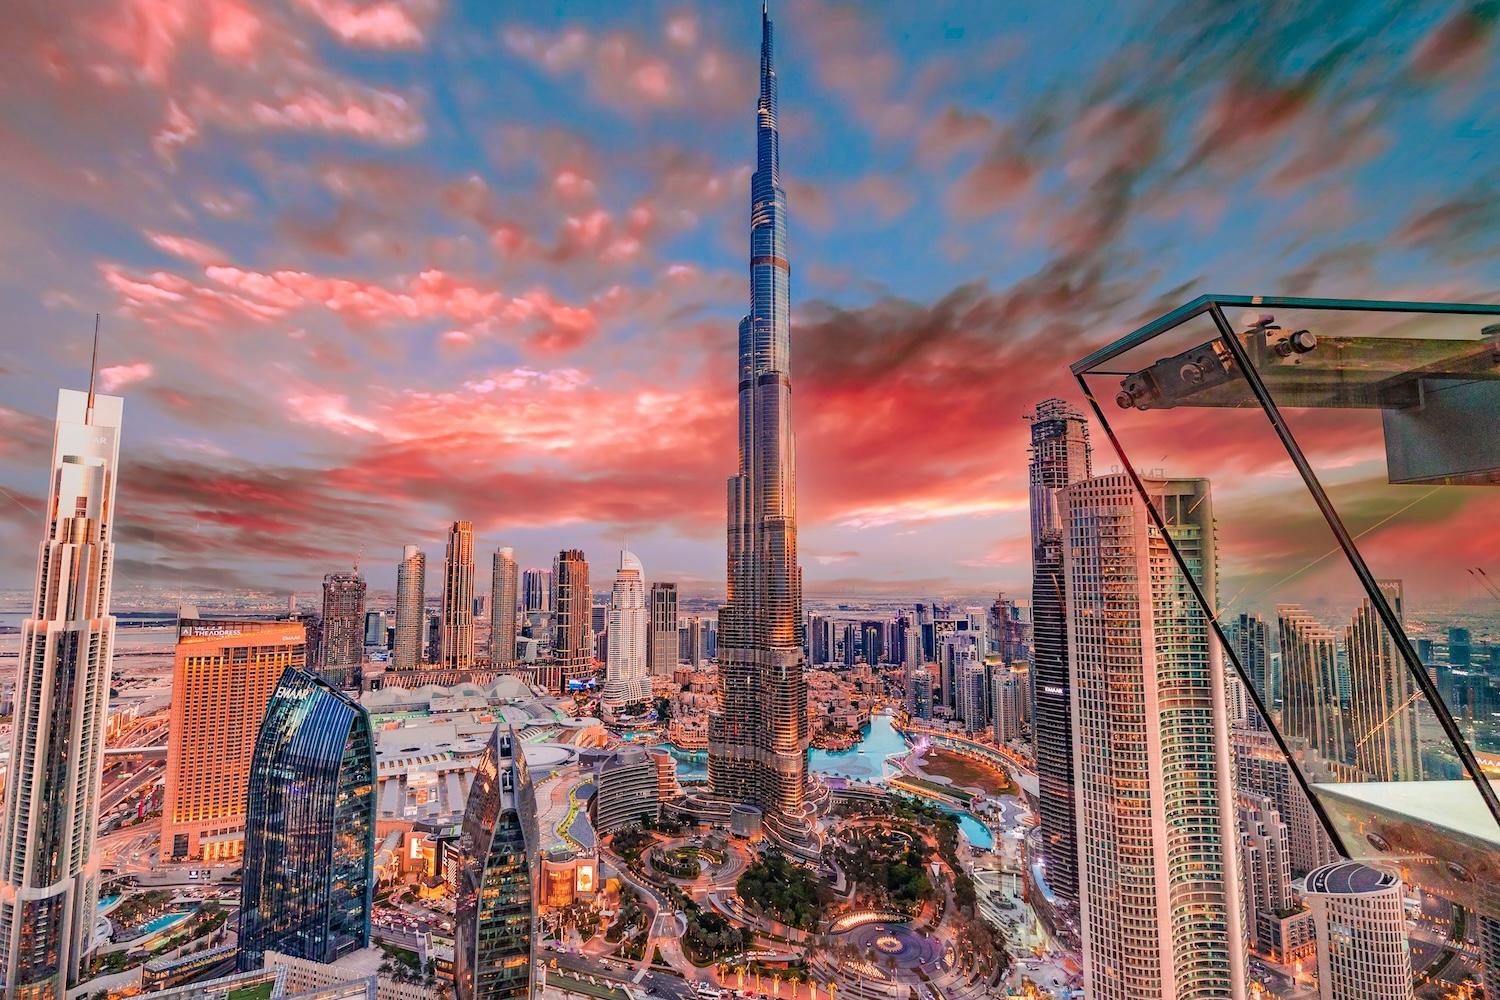 Burj Khalifa in Dubai — tallest skyscrapers in the world